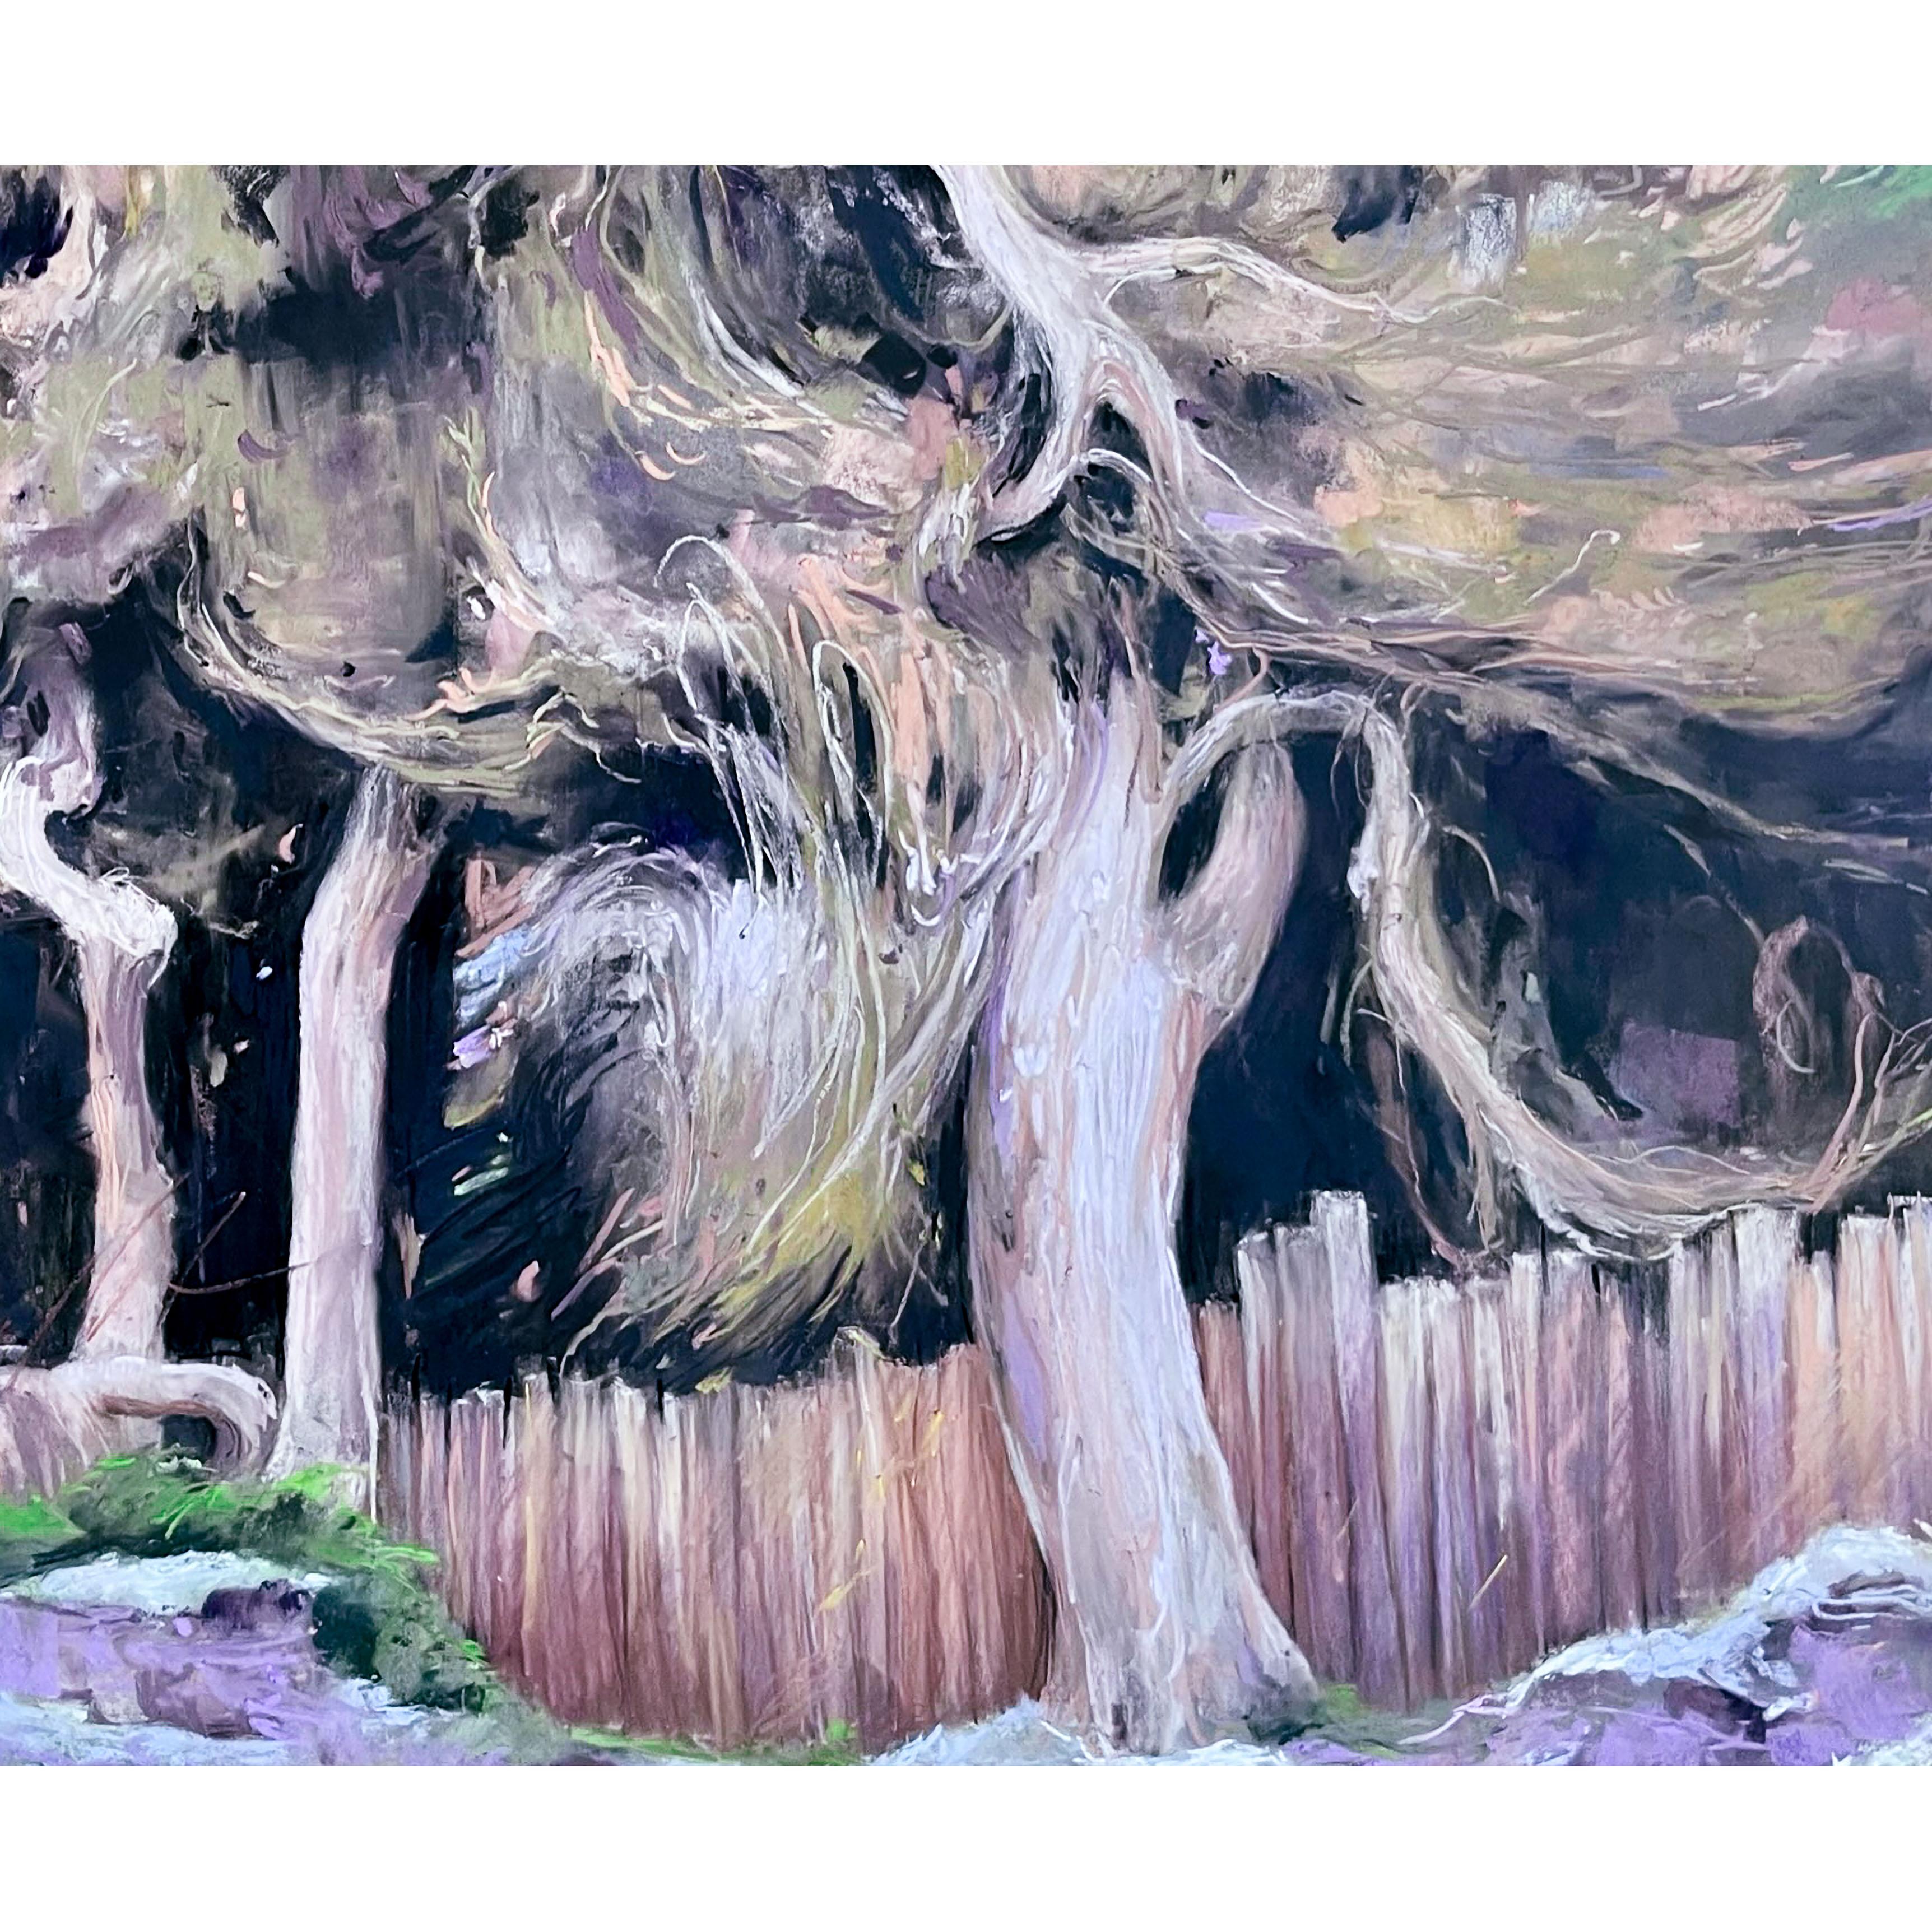 Julia Lambright
Whale's Watch
Soft pastel on pastel sandpaper board
Image size: 20” x 24”
2022
